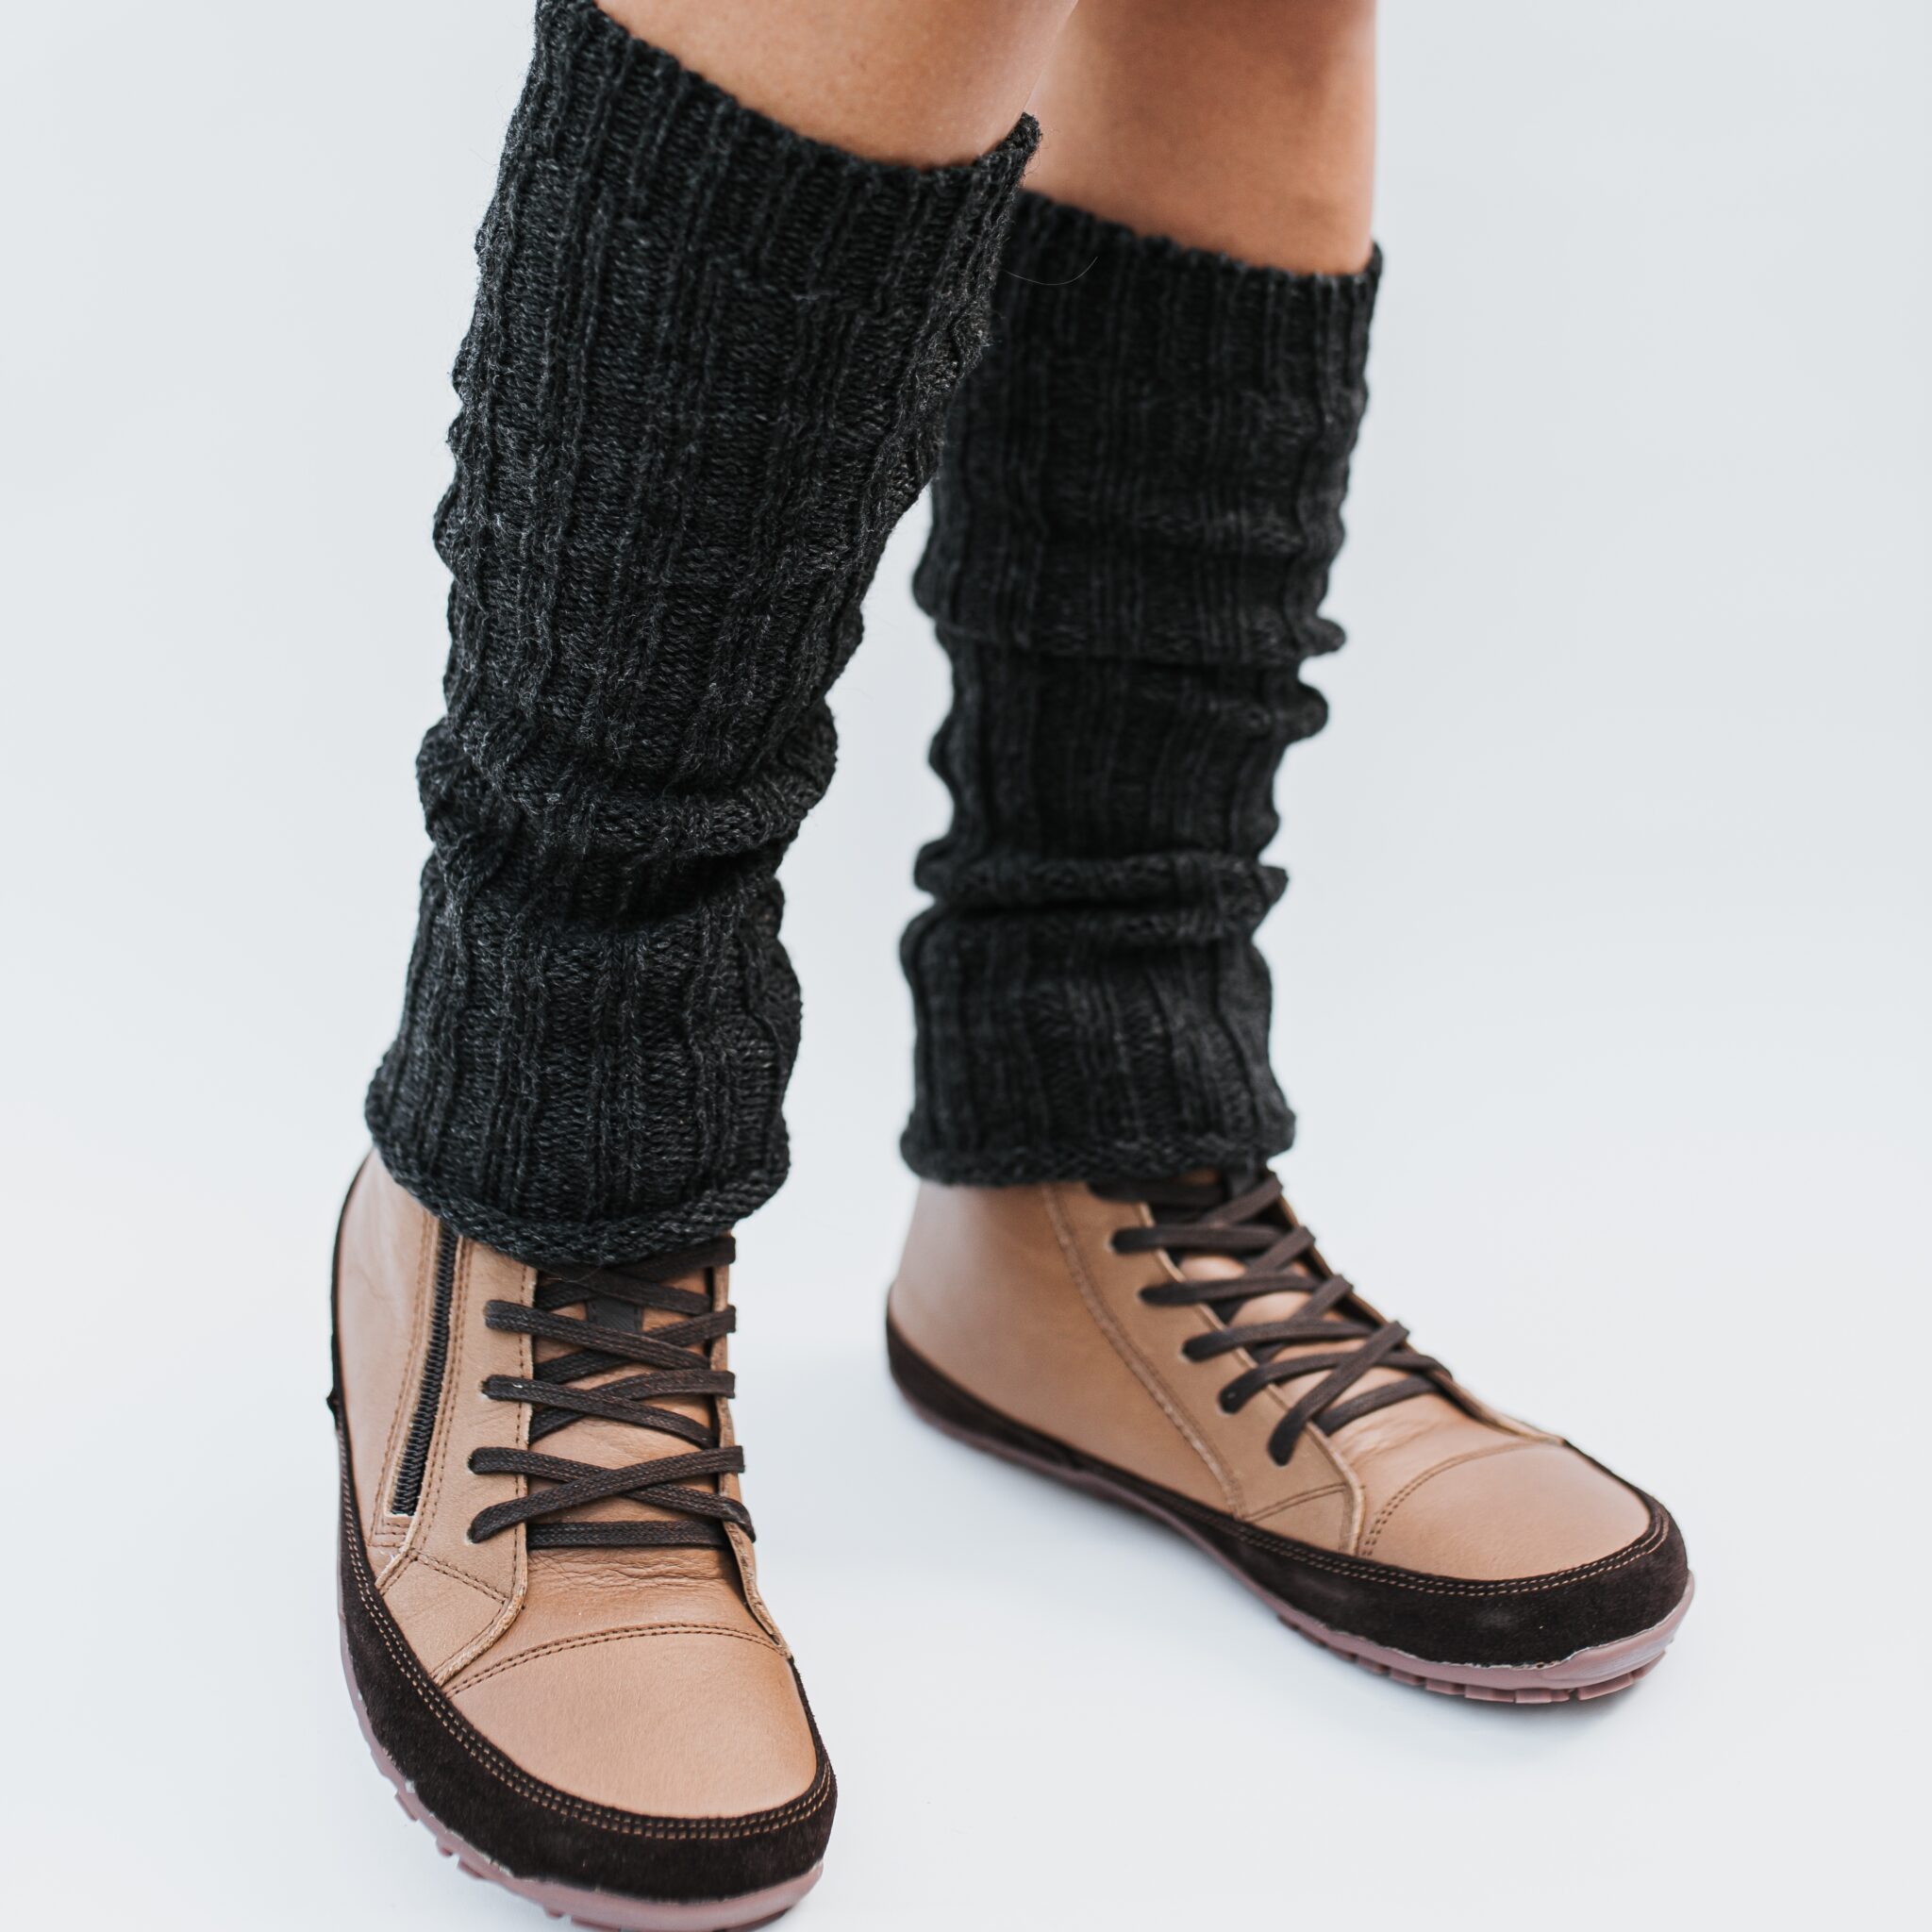 Woolen leg warmers - Magical Leg Warmers - Anthracite